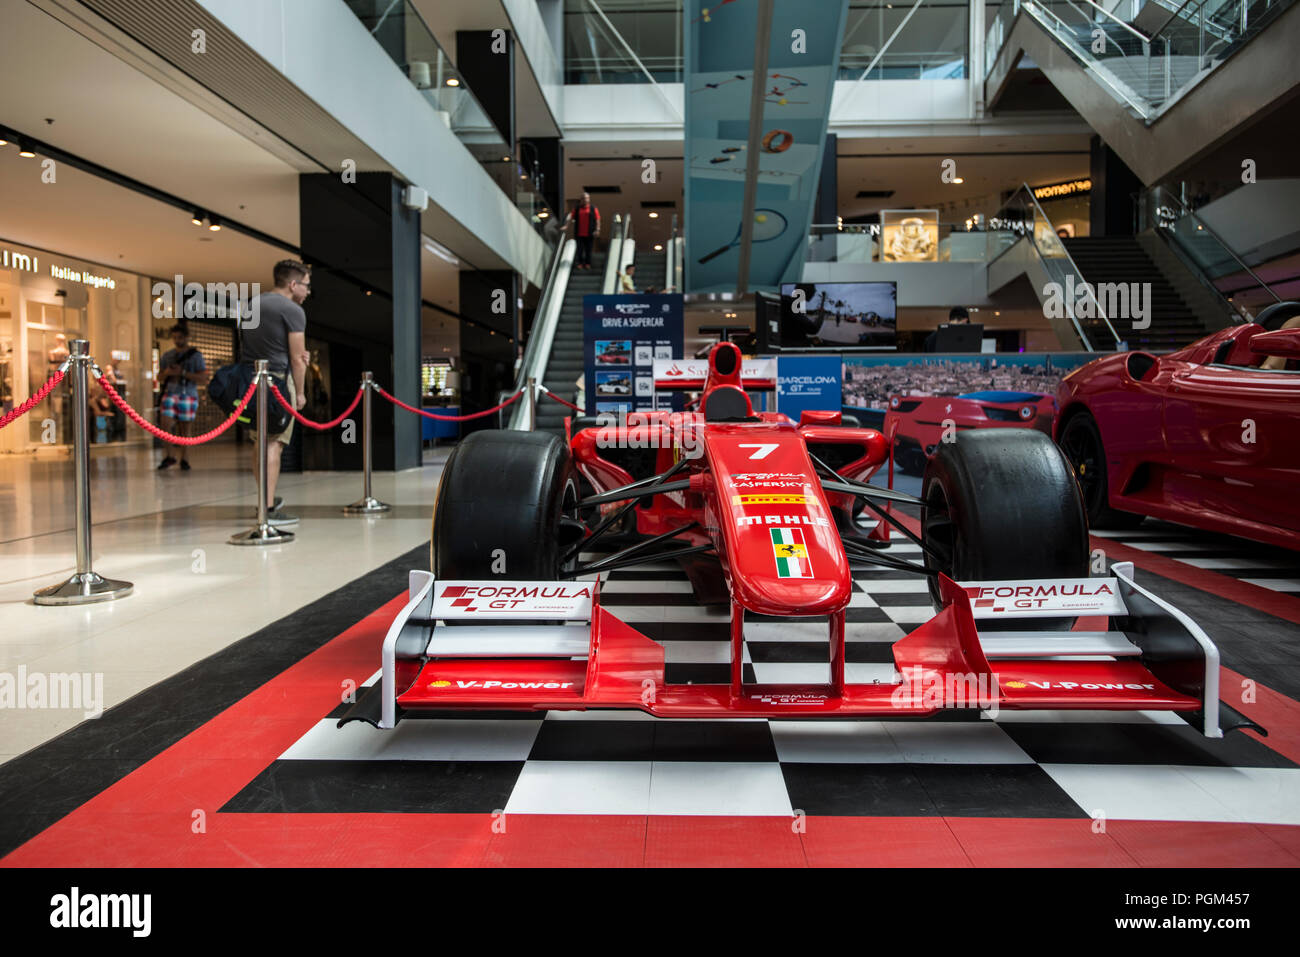 Ferrari car on display at Barceloneta Stock Photo